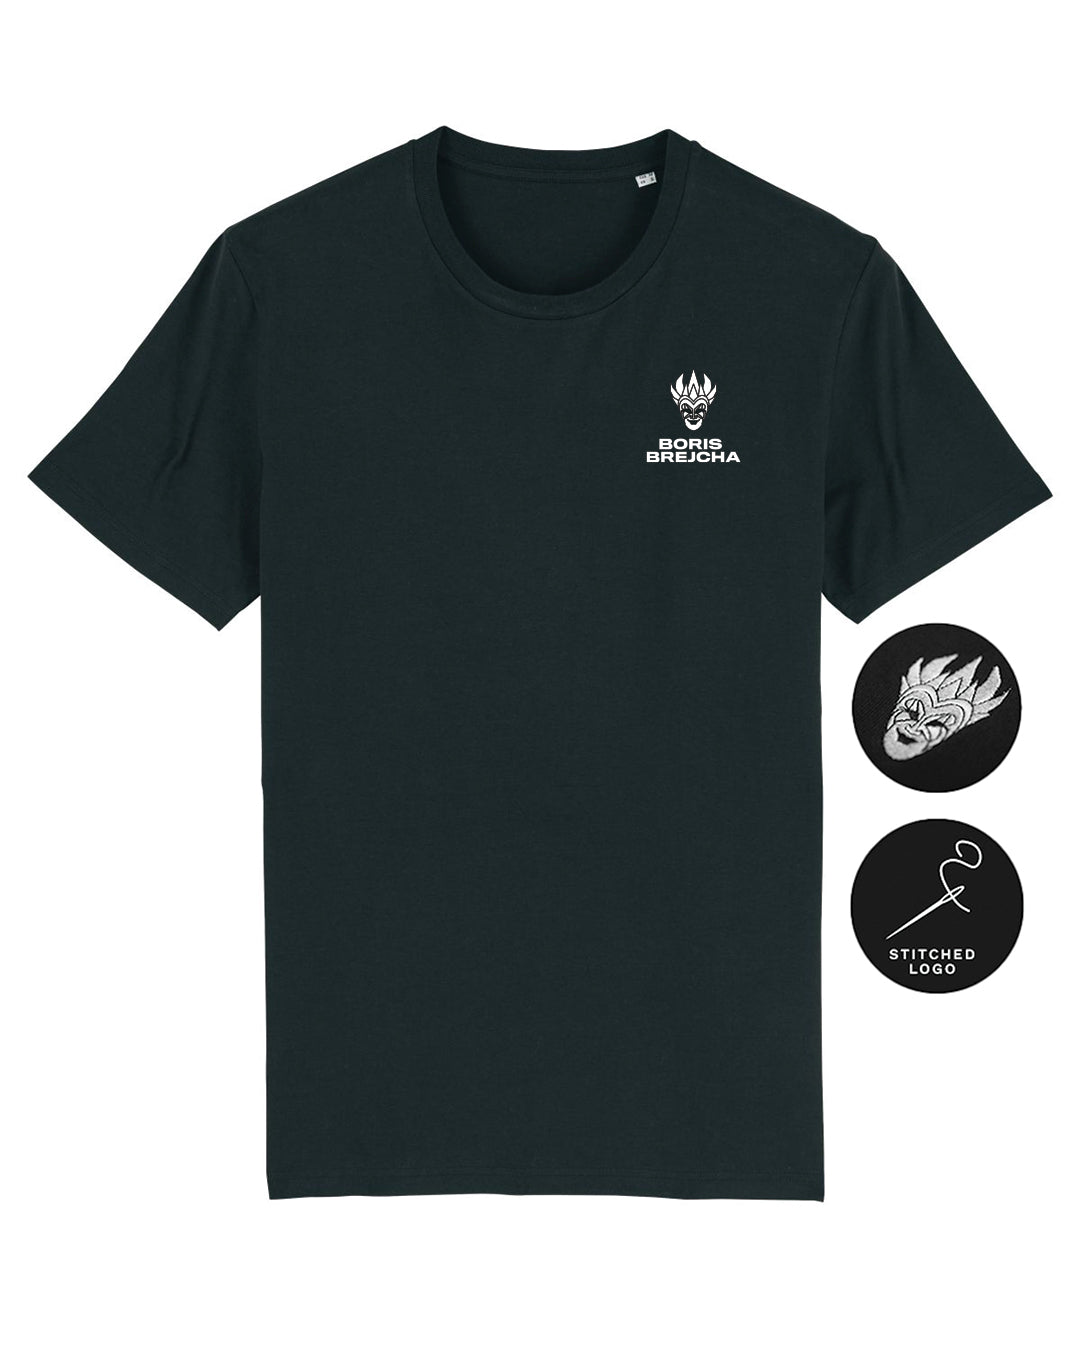 Boris Brejcha - Mini Logo T-Shirt black (Stitched Logo)